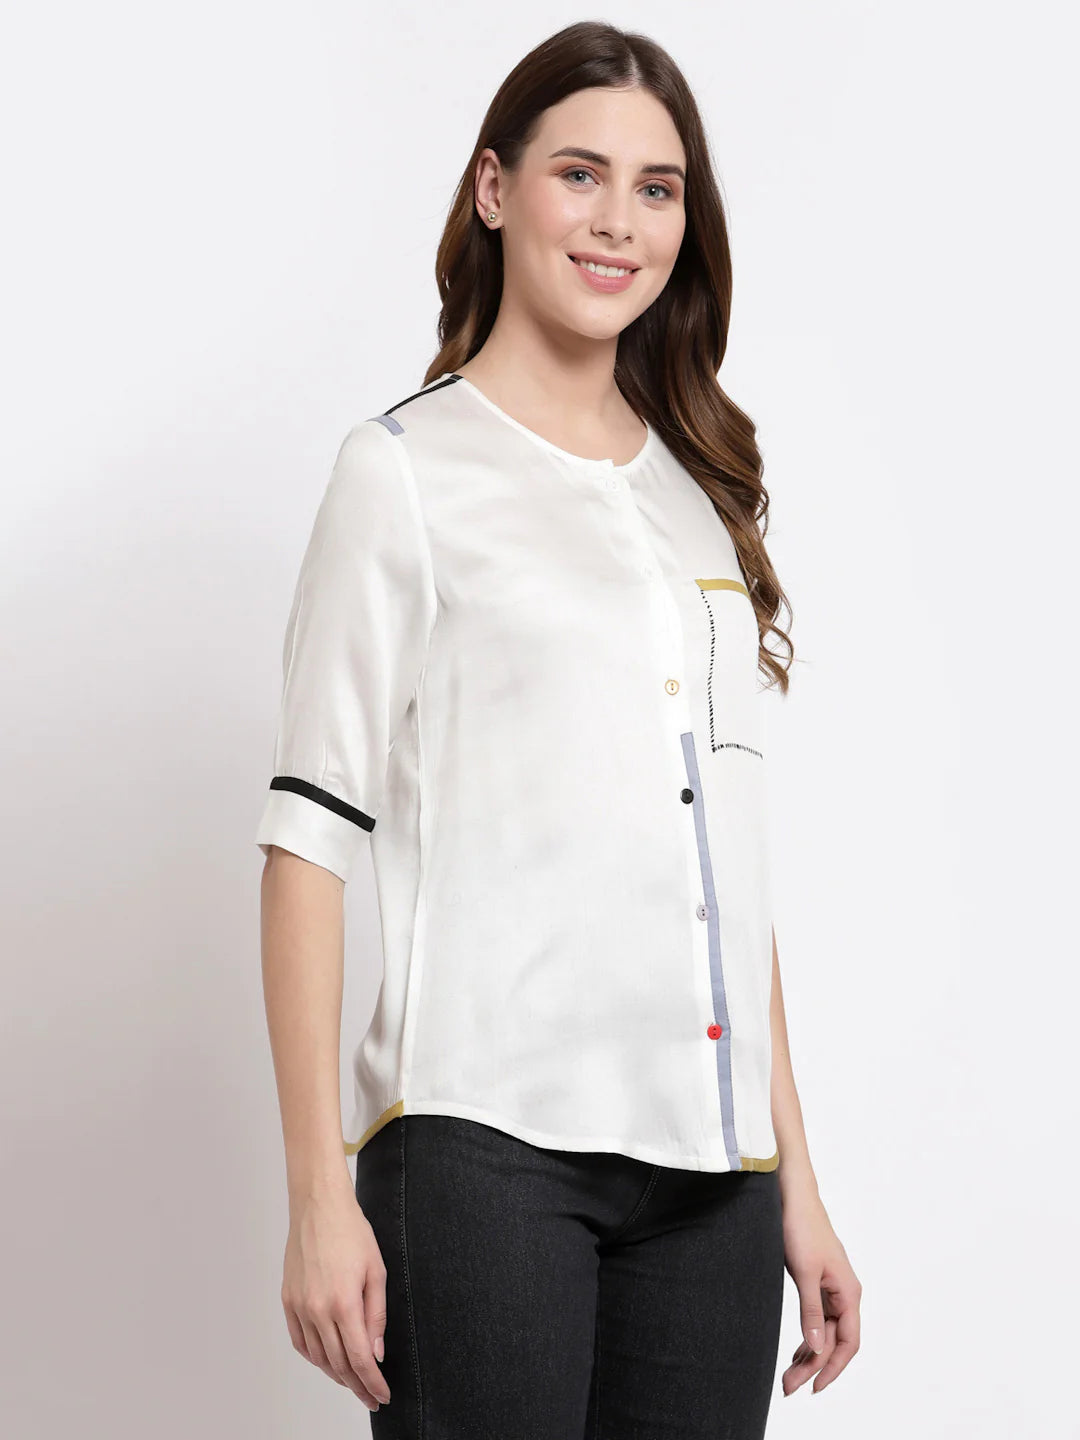 White Button-Down Shirt for Women | Whimsical White Button-Down Shirt